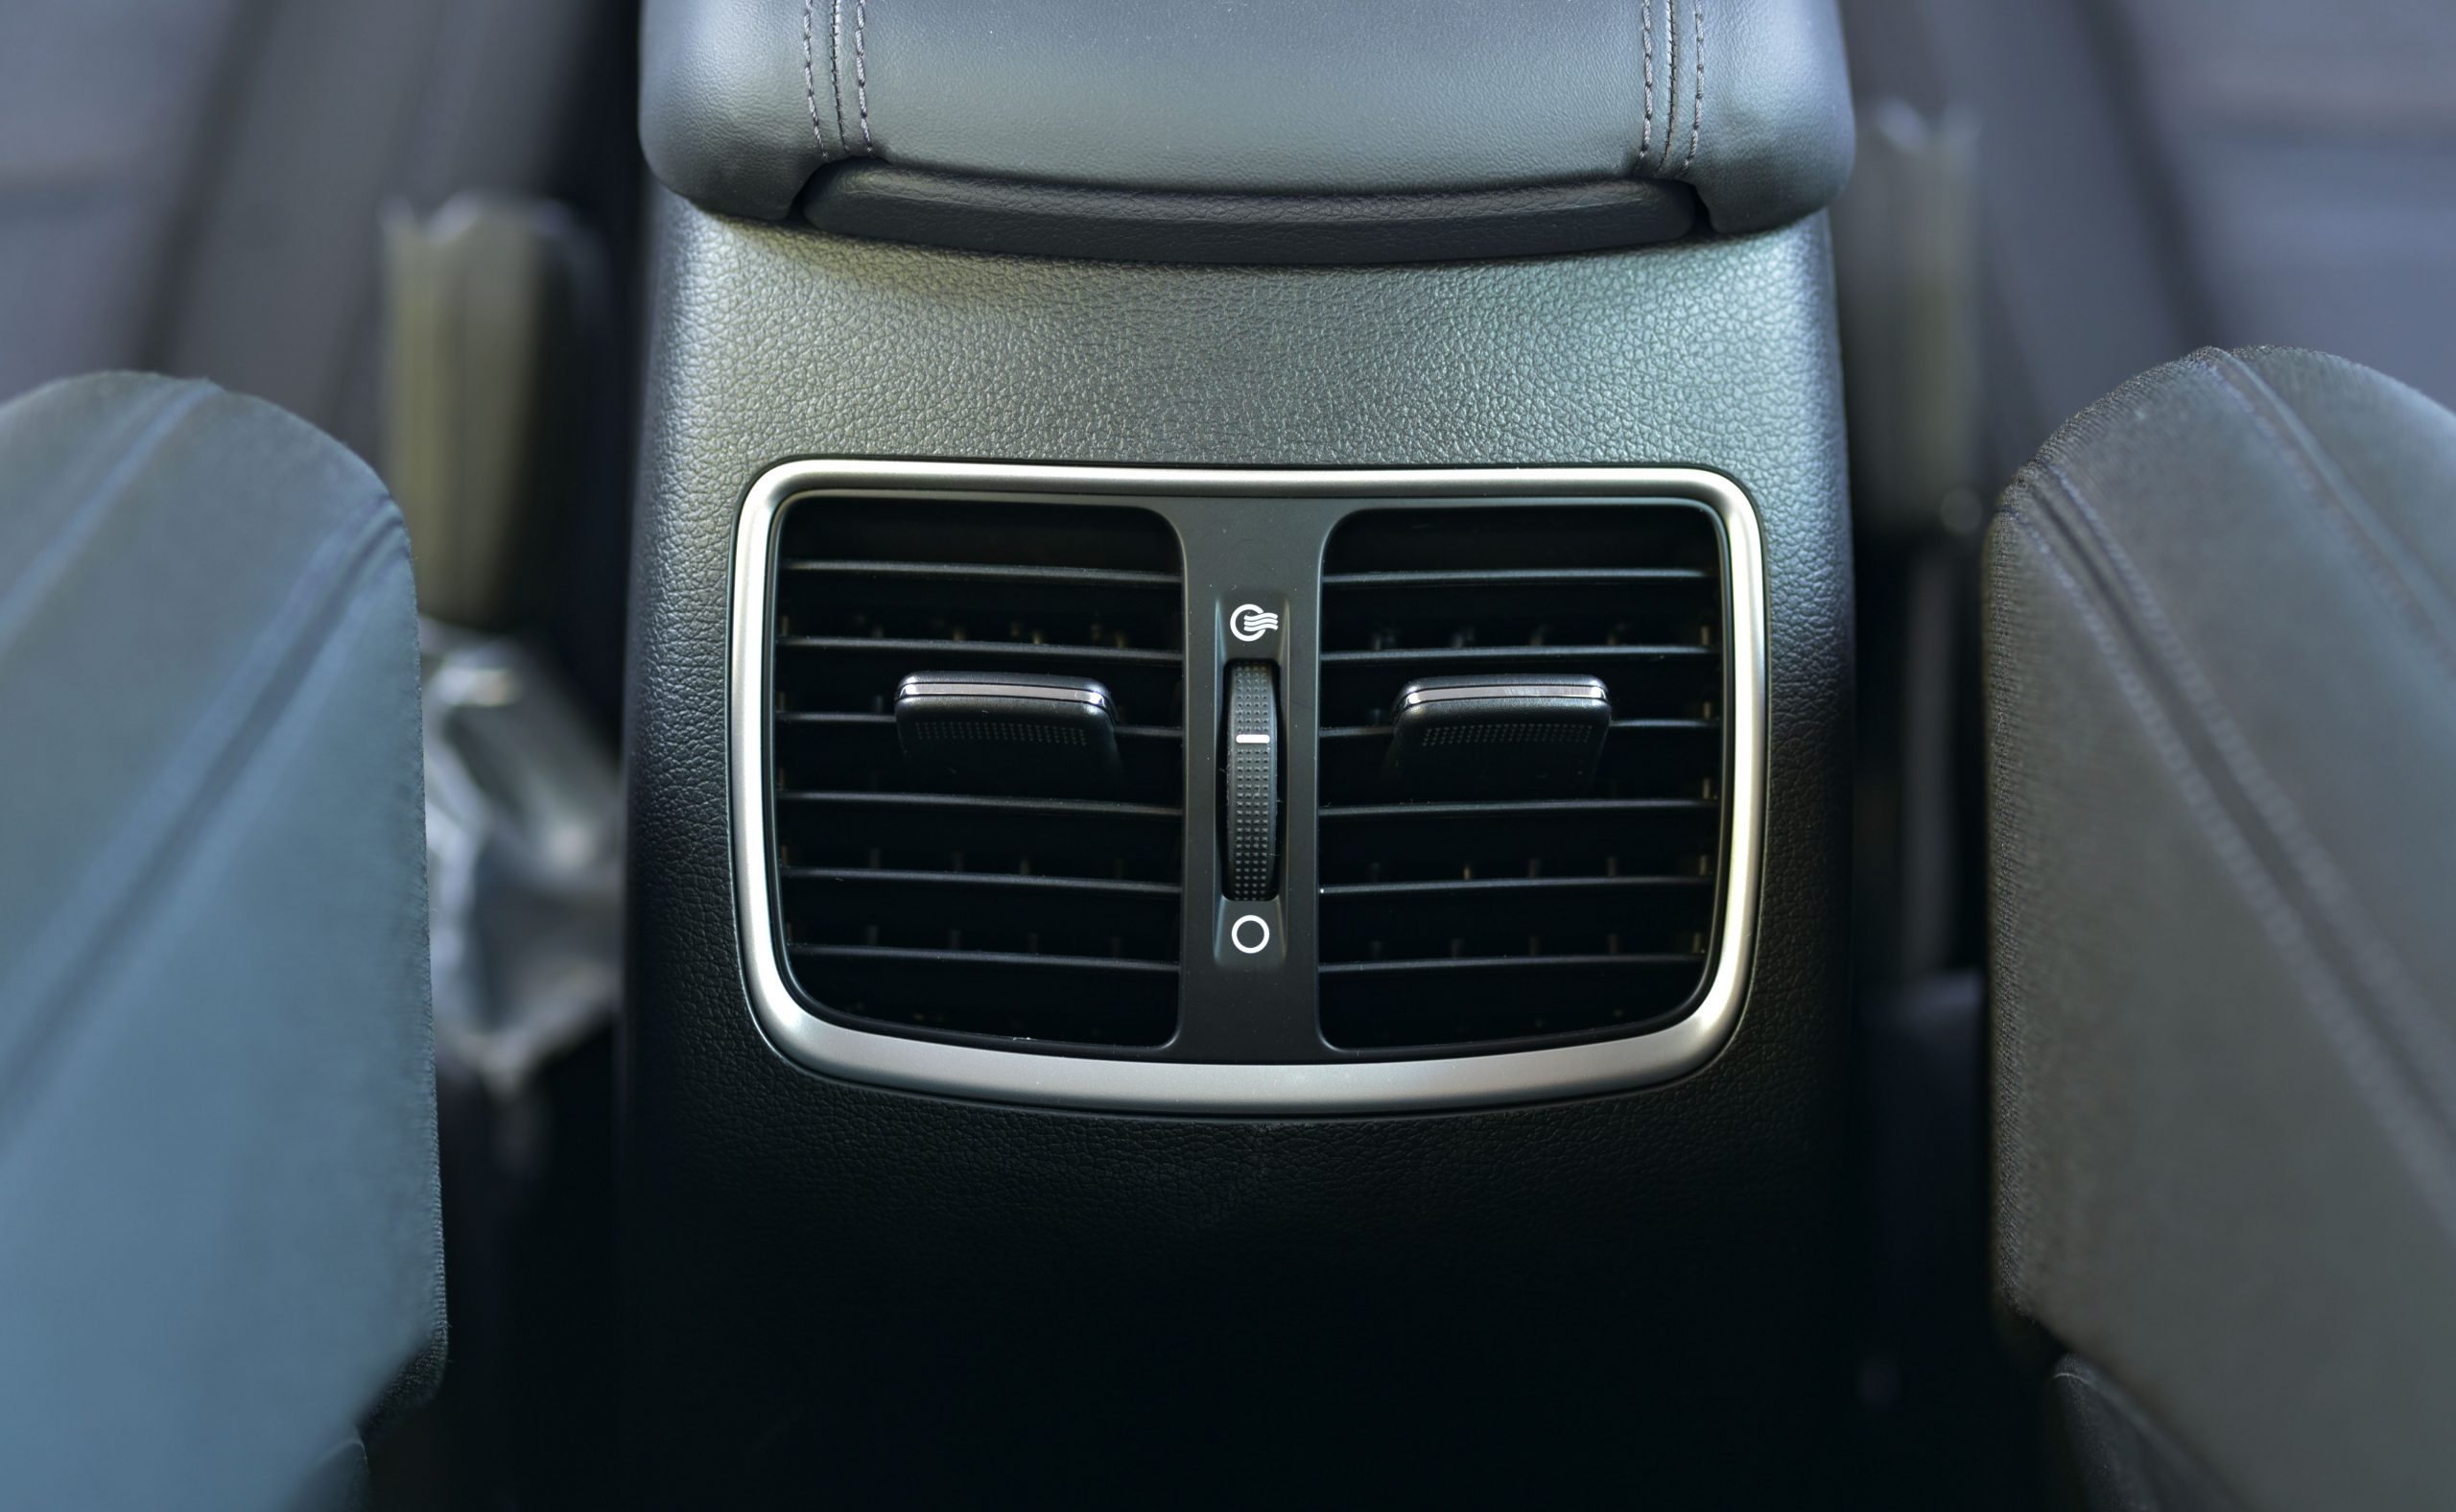 Air con vents in car